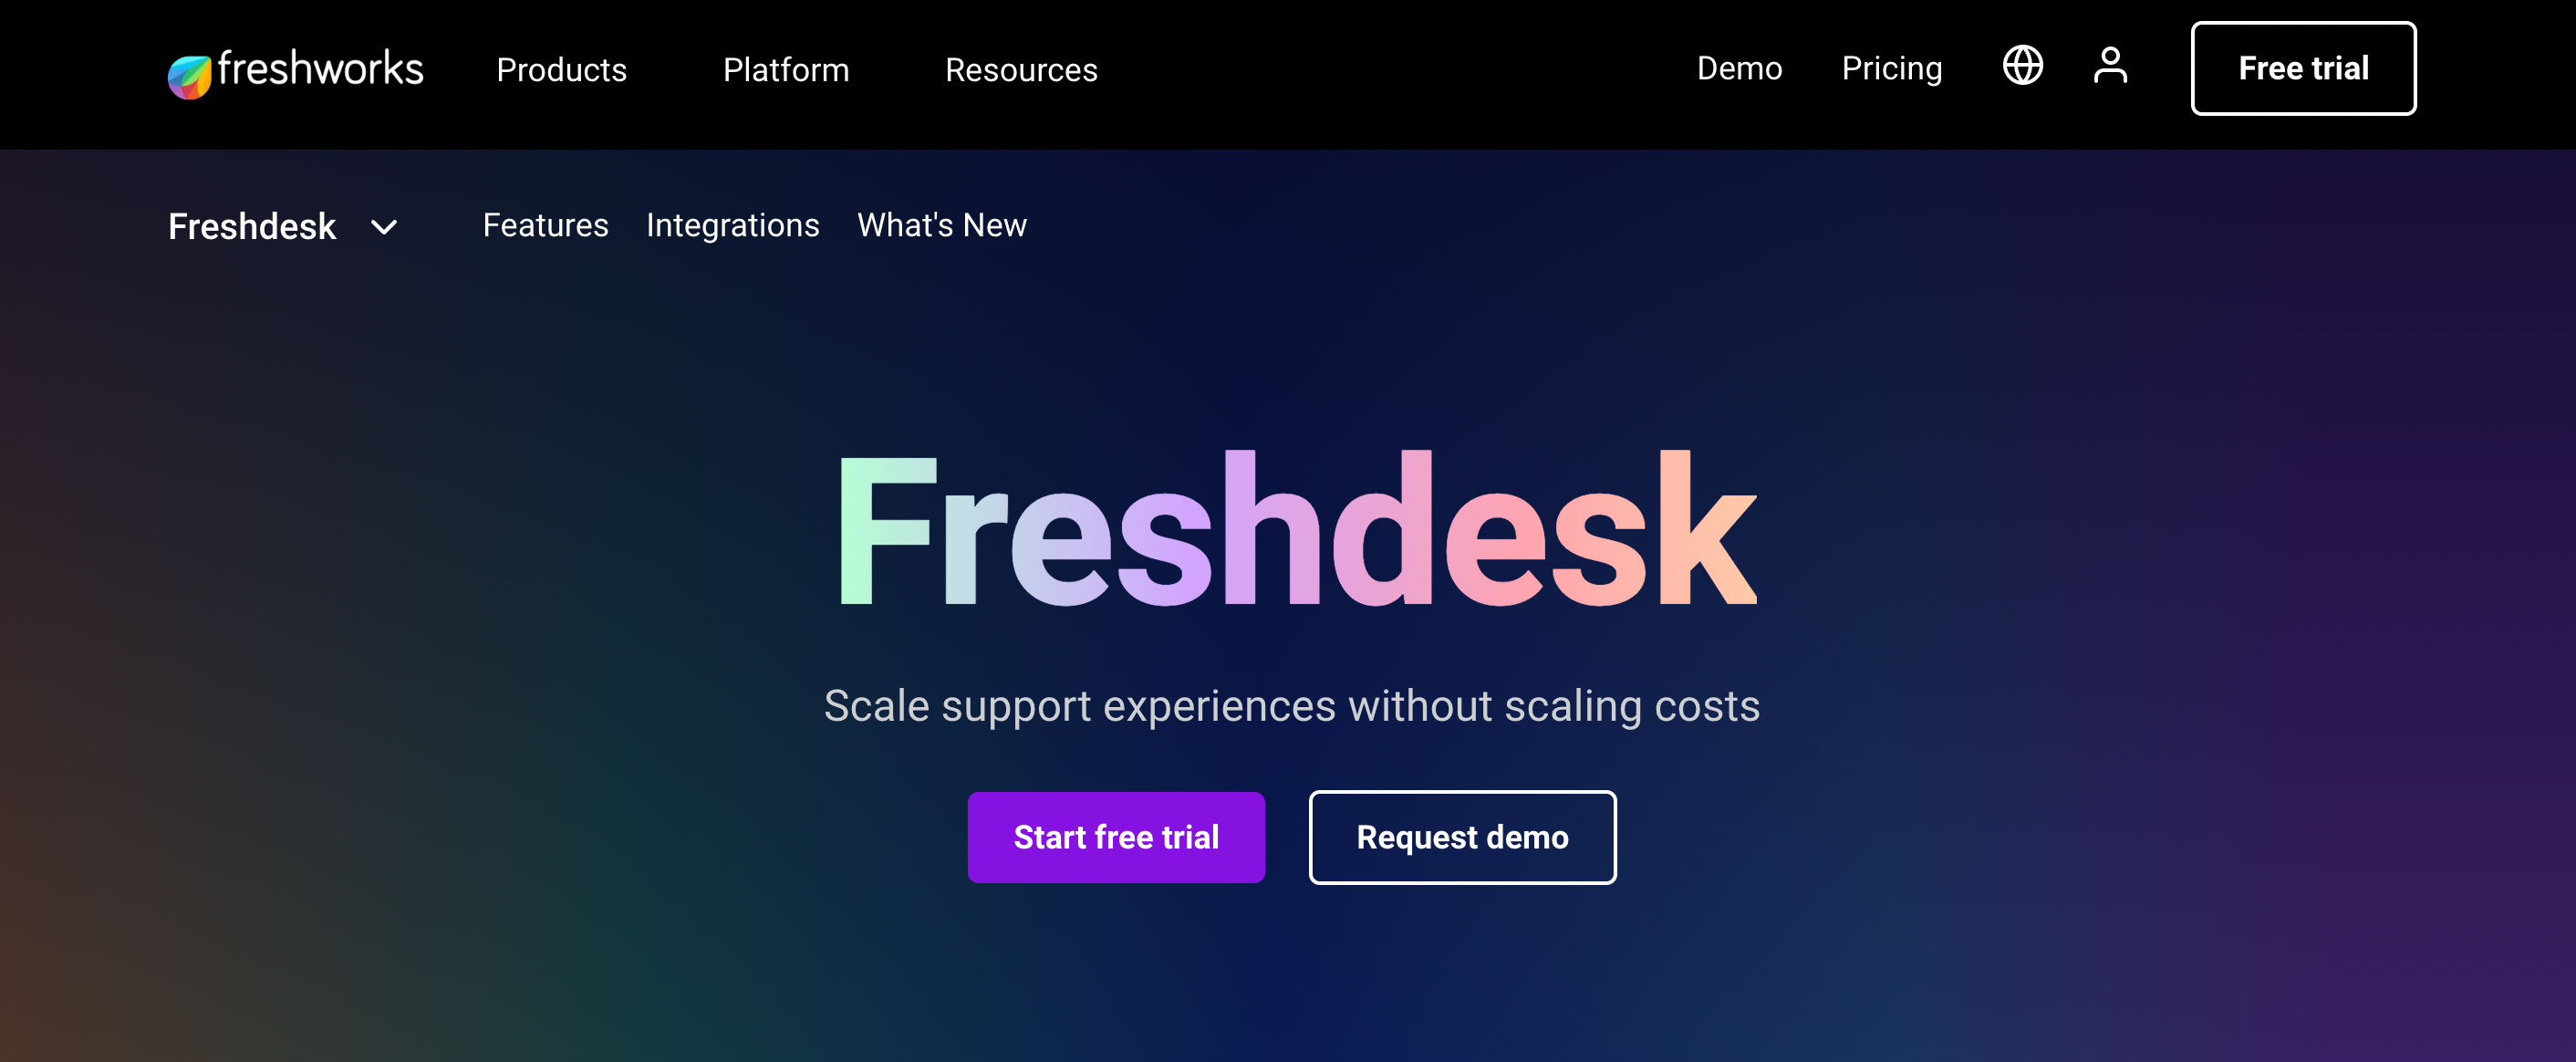 Freshdesk id a cloud-based help desk solution.